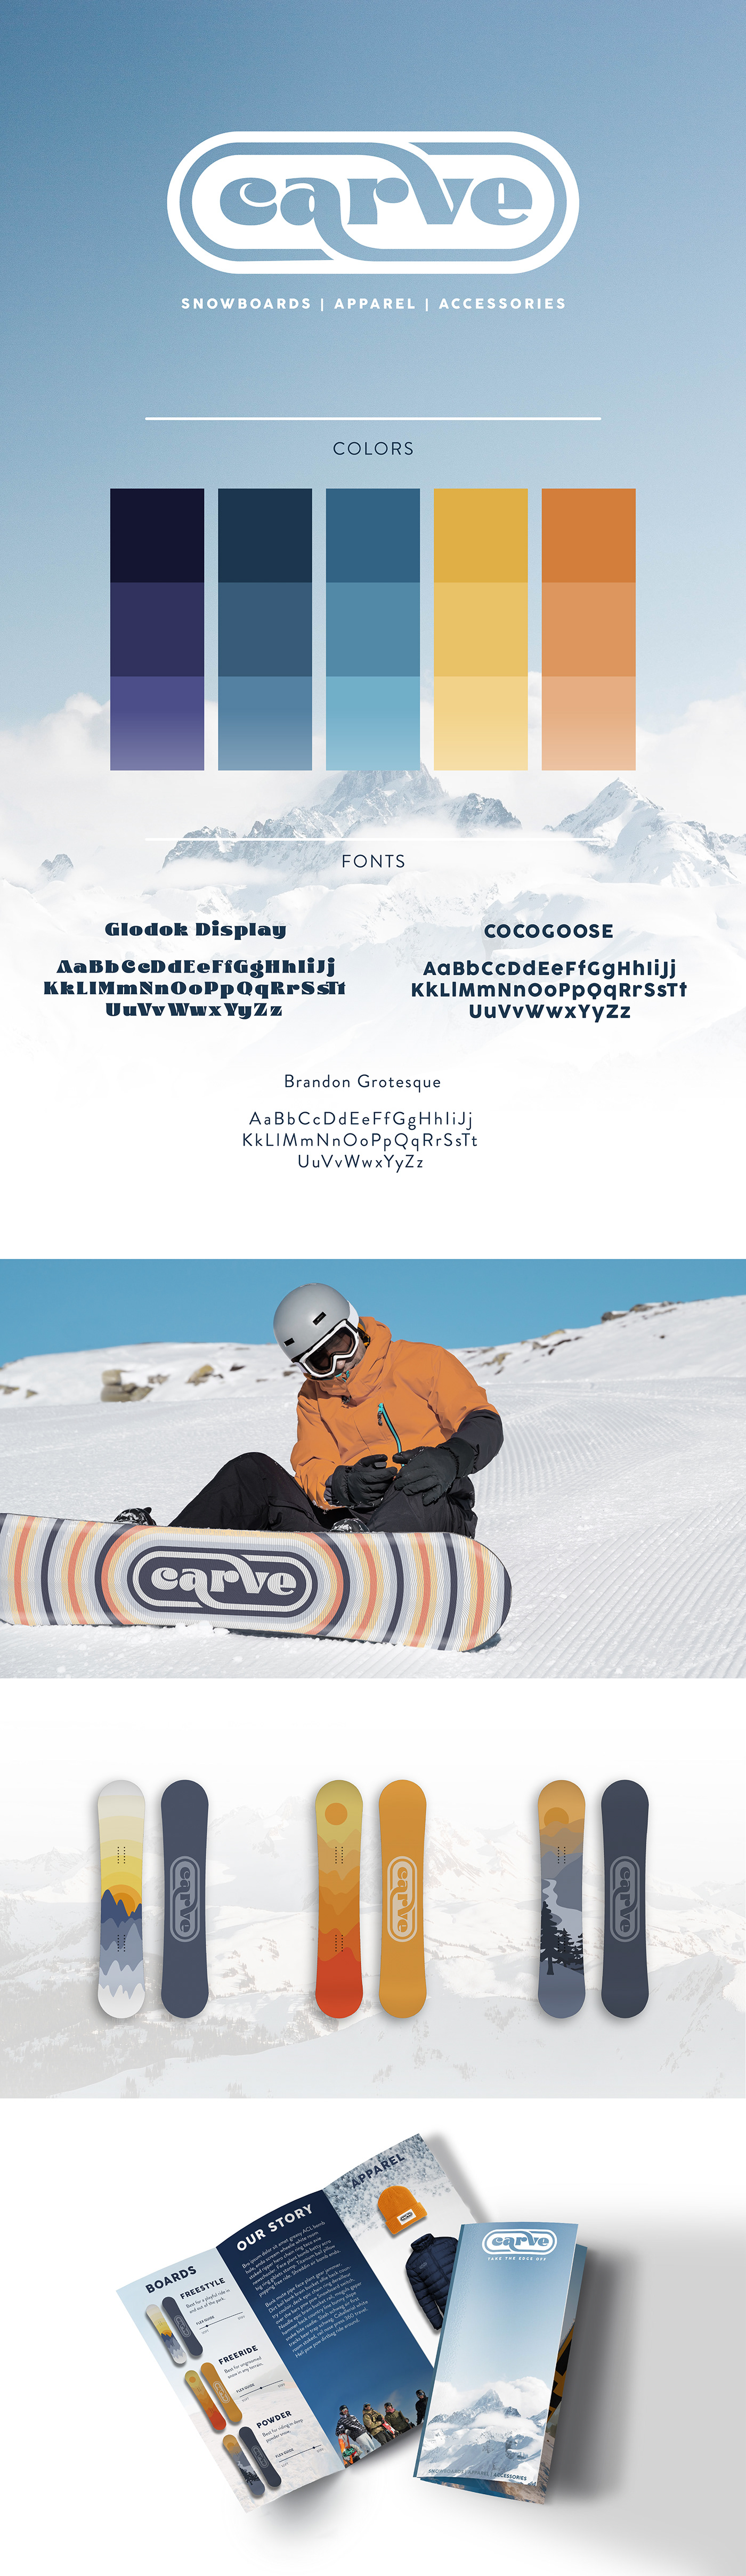 accessories apparel brand identity branding  design logo skiing snow Snowboarding winter